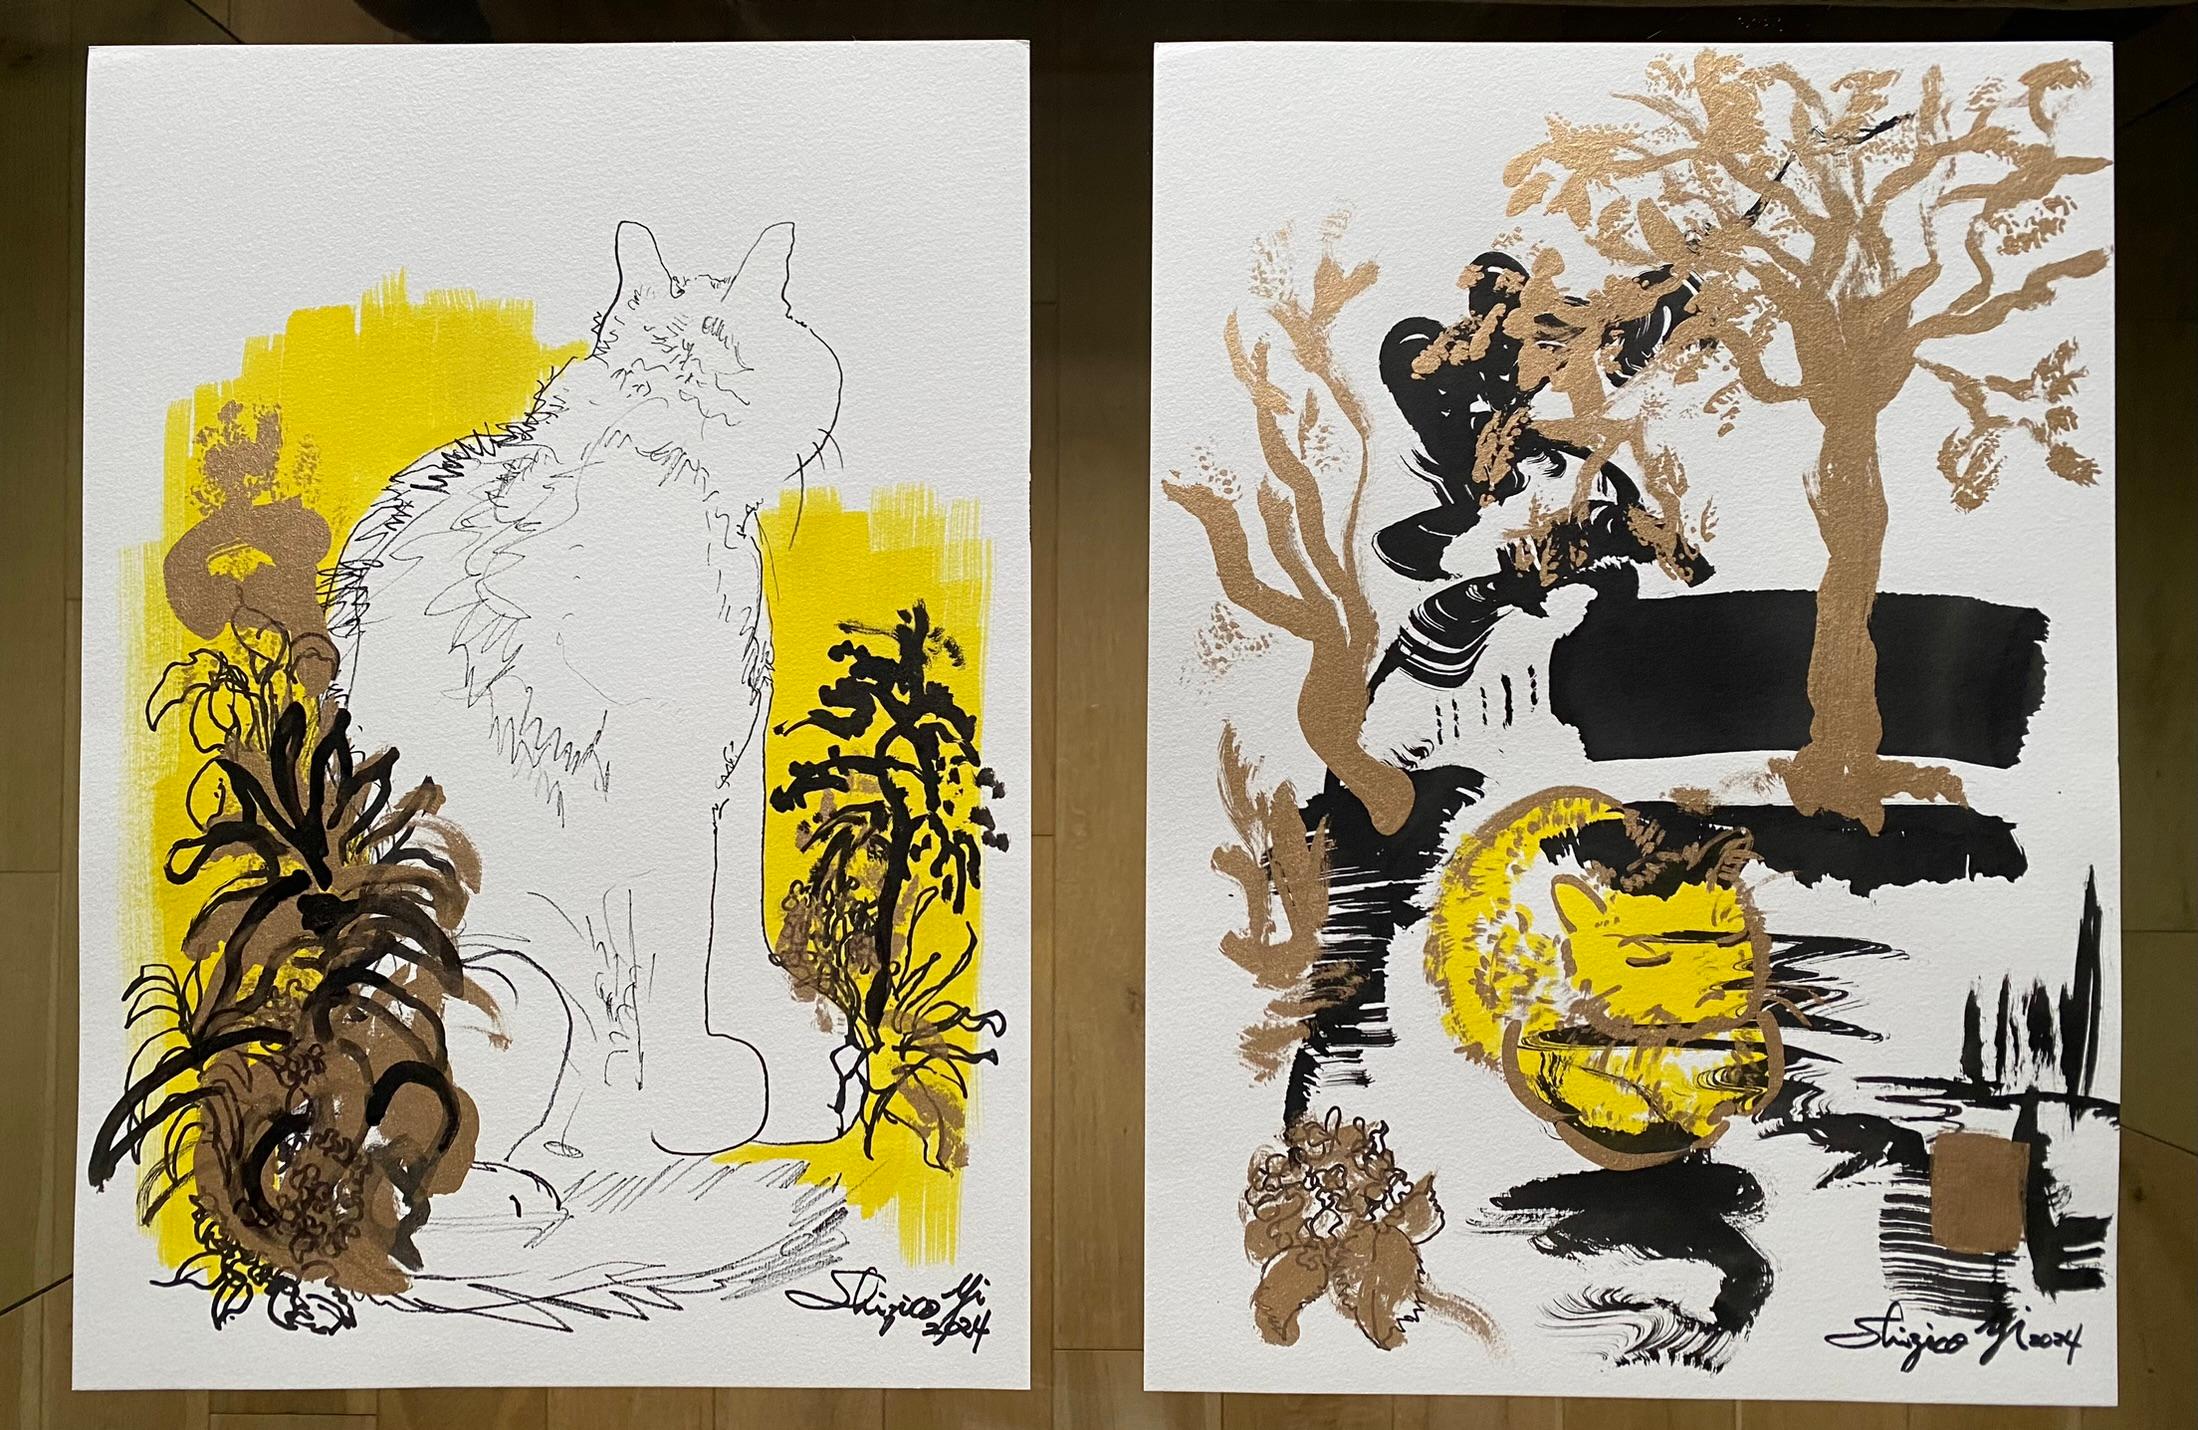 Shizico Yi Landscape Art - Original Set-Breakfast with Cat Series-British Award Artist-Gold, ink on papers